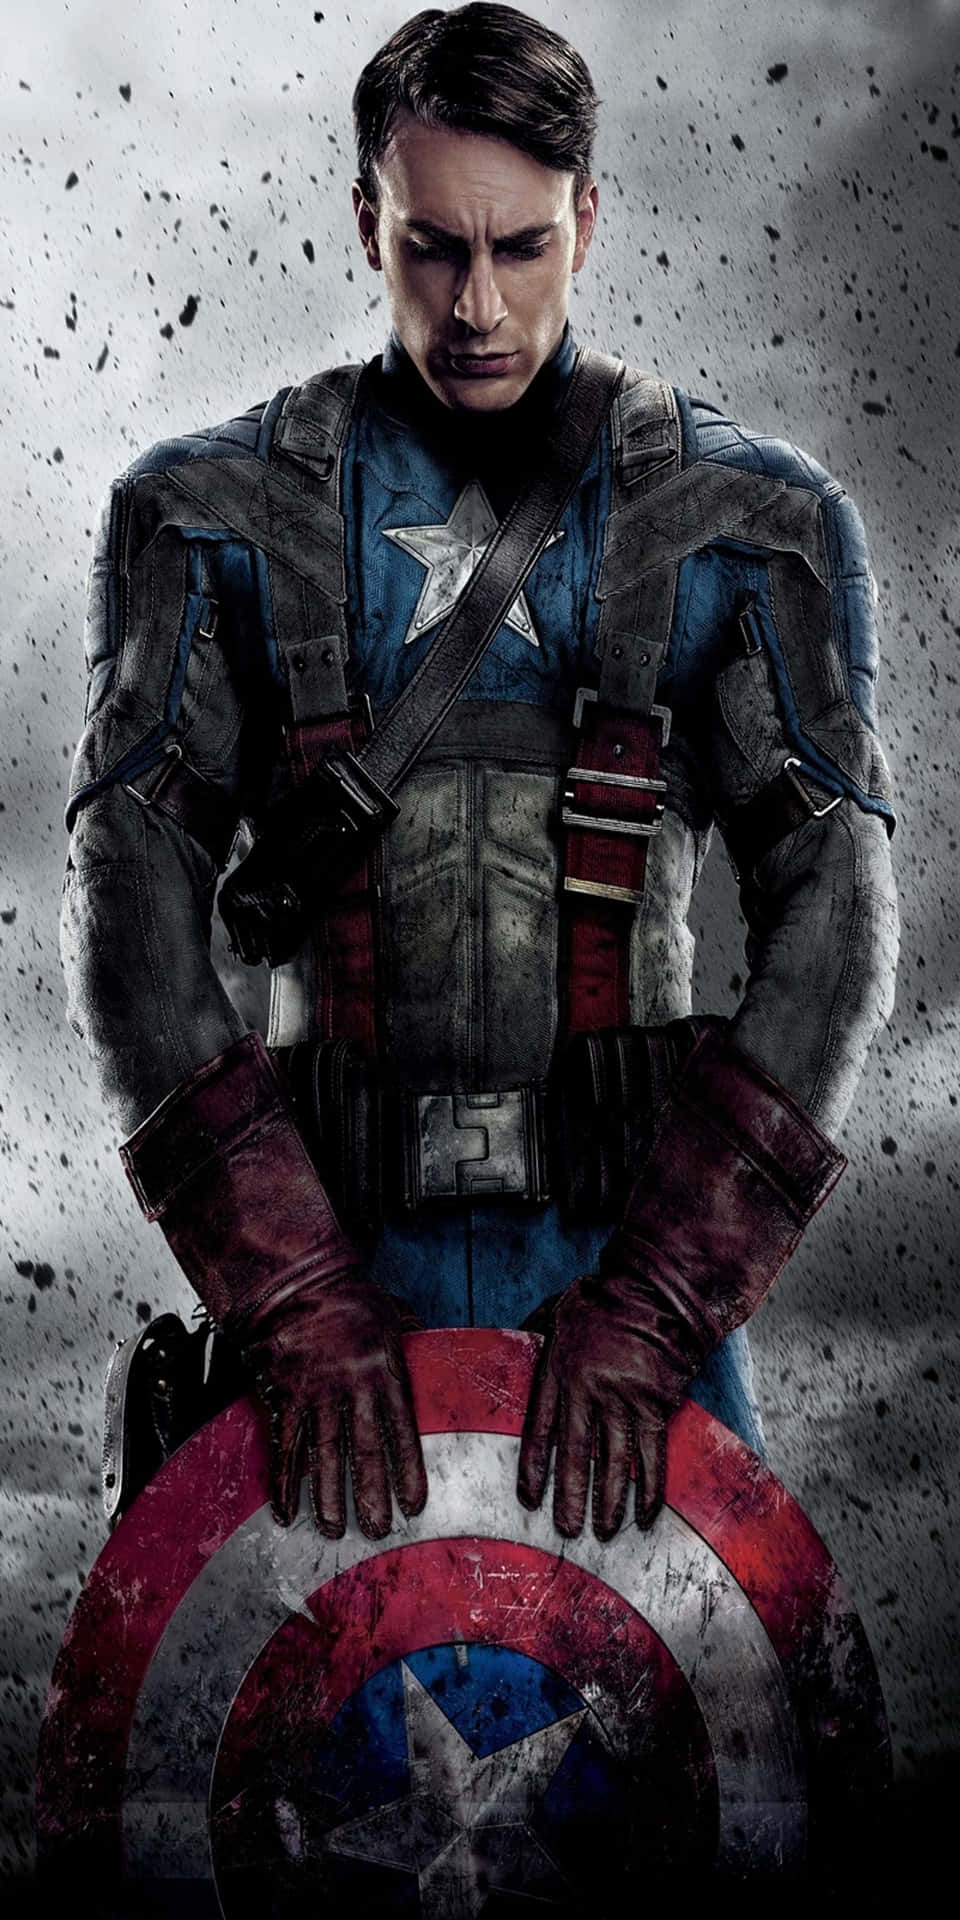 Pixel3 Bakgrundsbild Av Captain America Från Mcu.